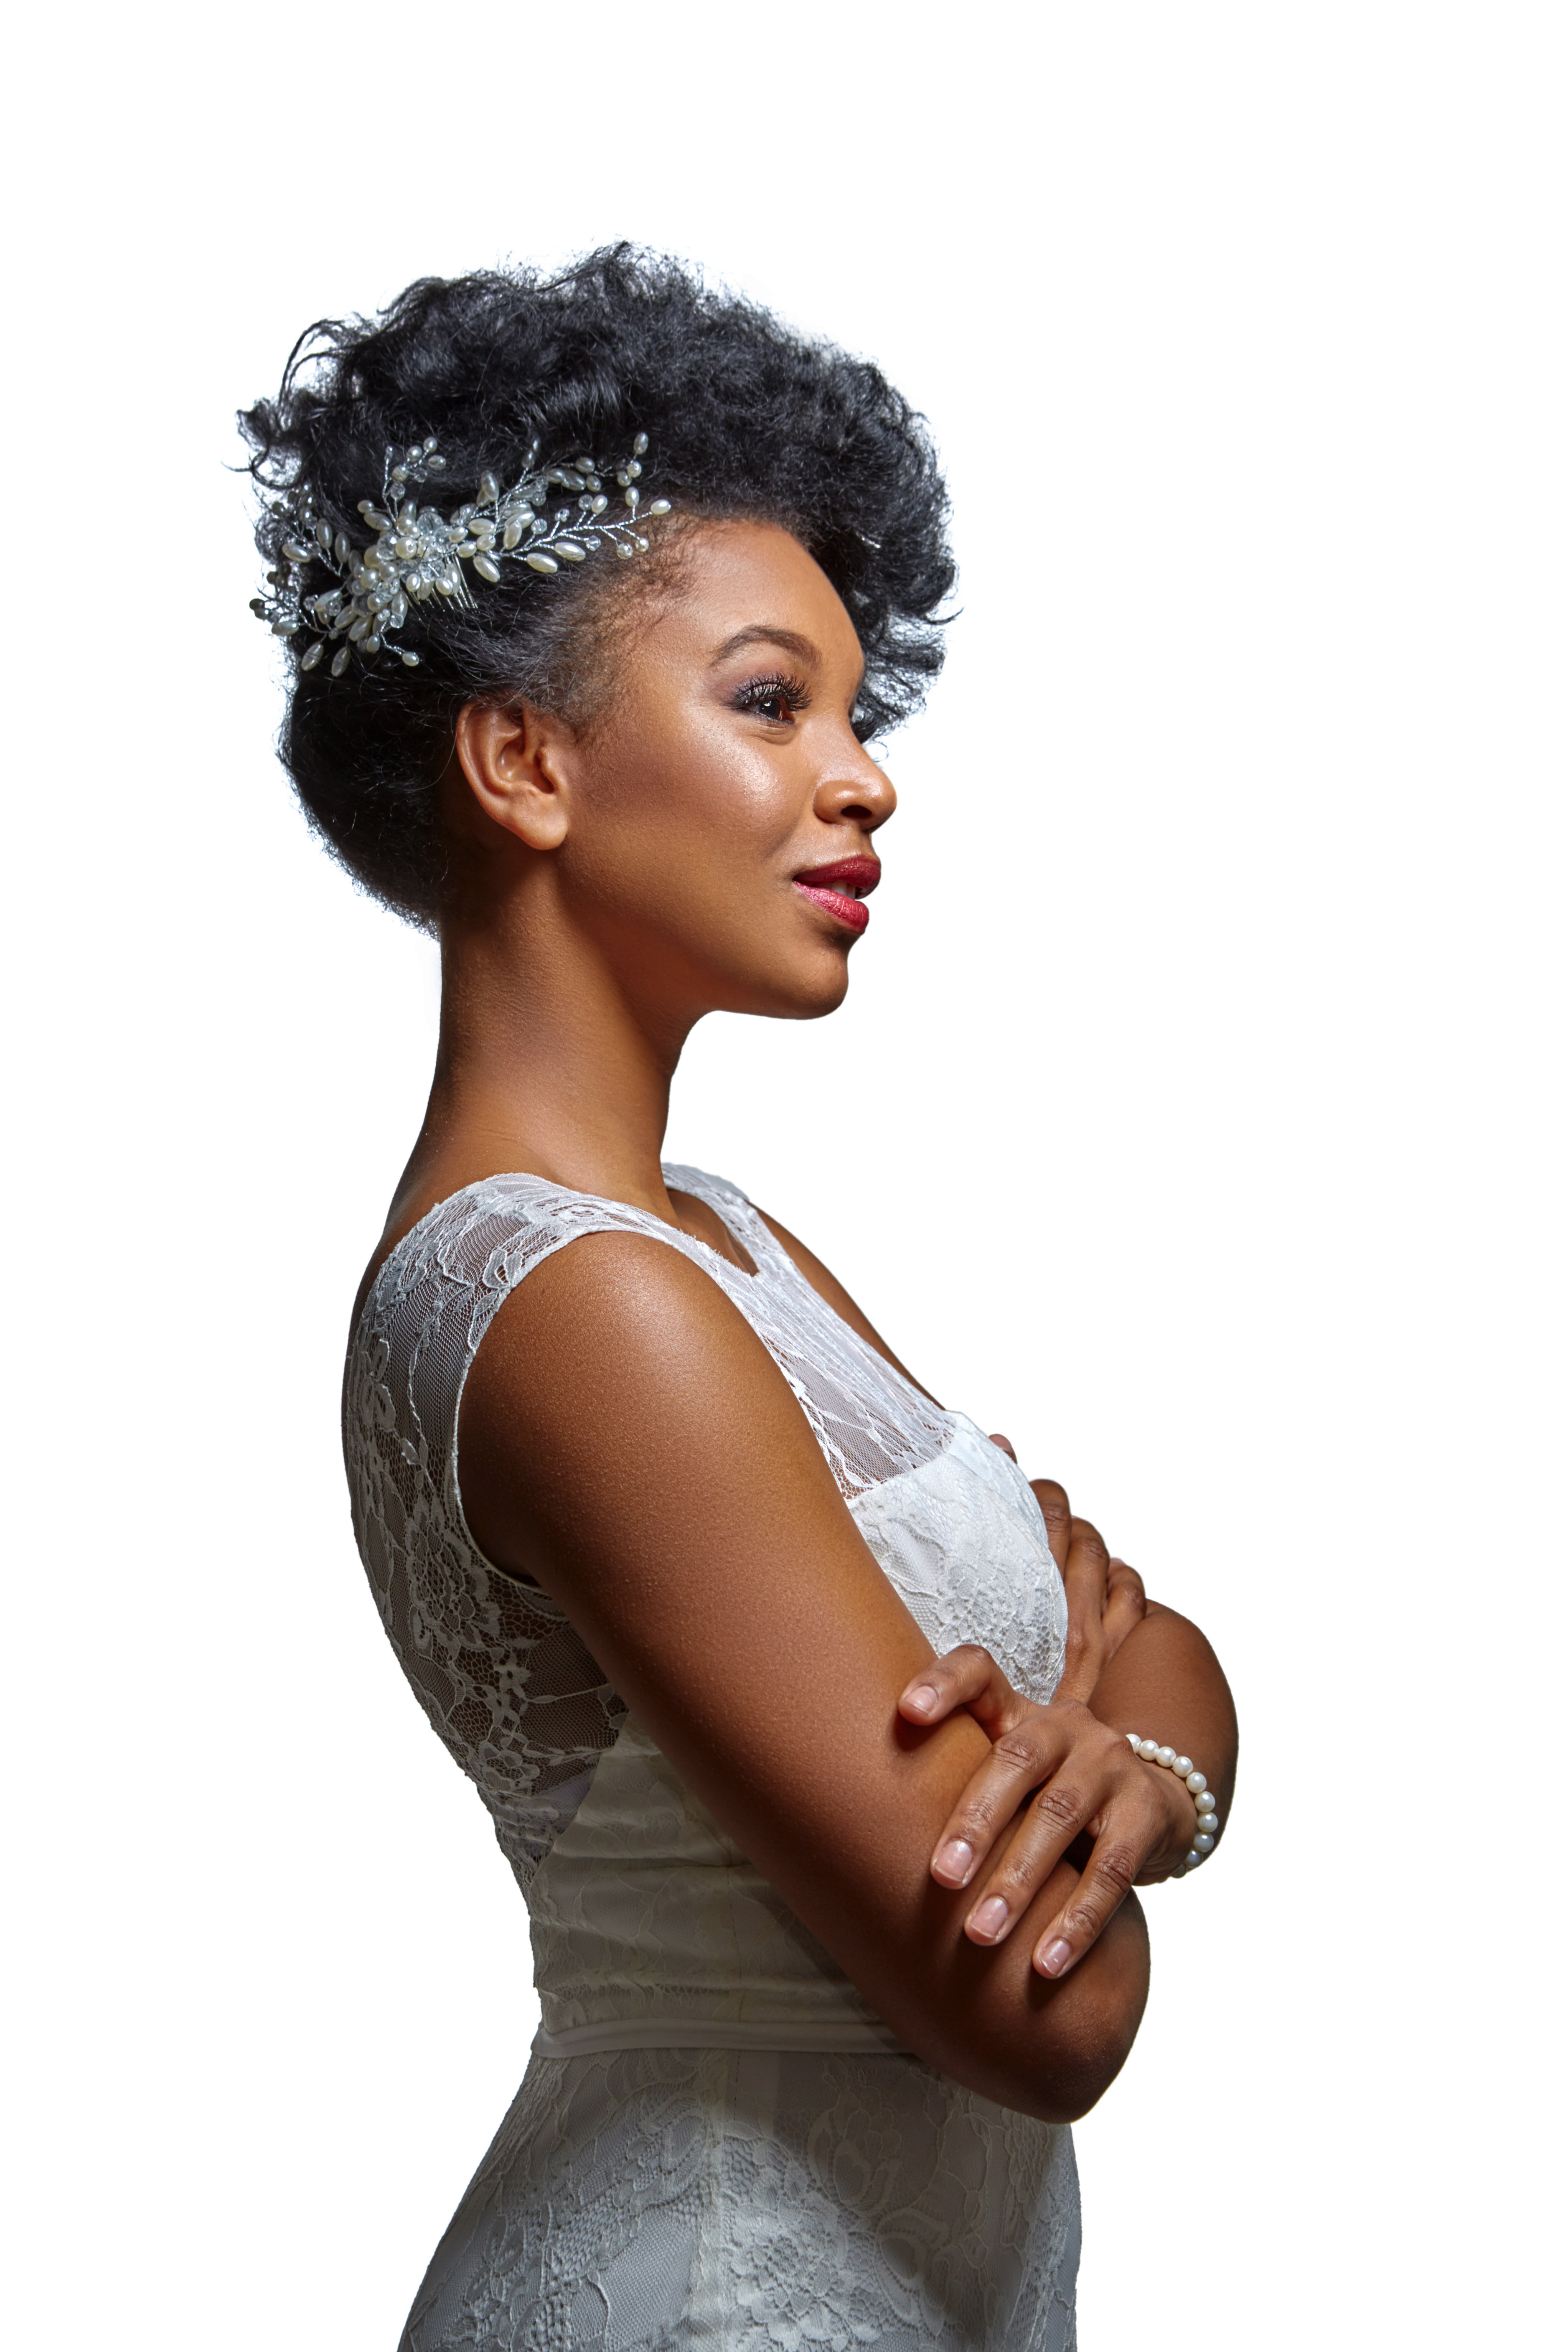 25 Easy Wedding Hairstyles You Can DIY | Wedding Hairstyles | BridalGuide